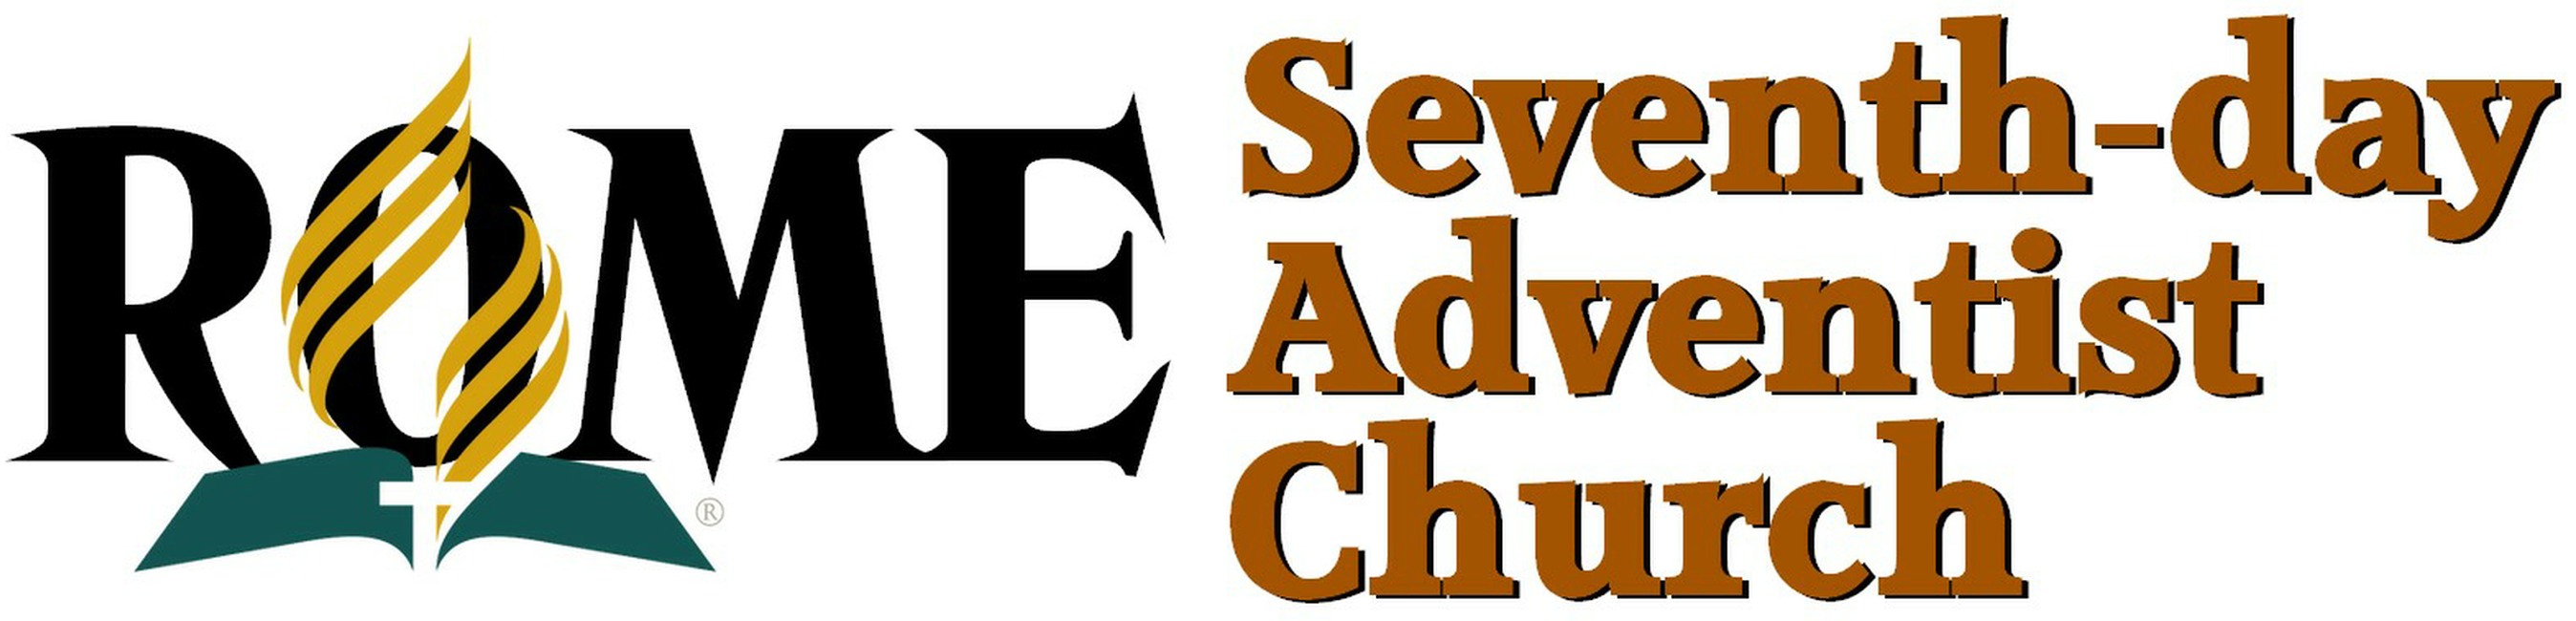 Rome Seventh-day Adventist Church